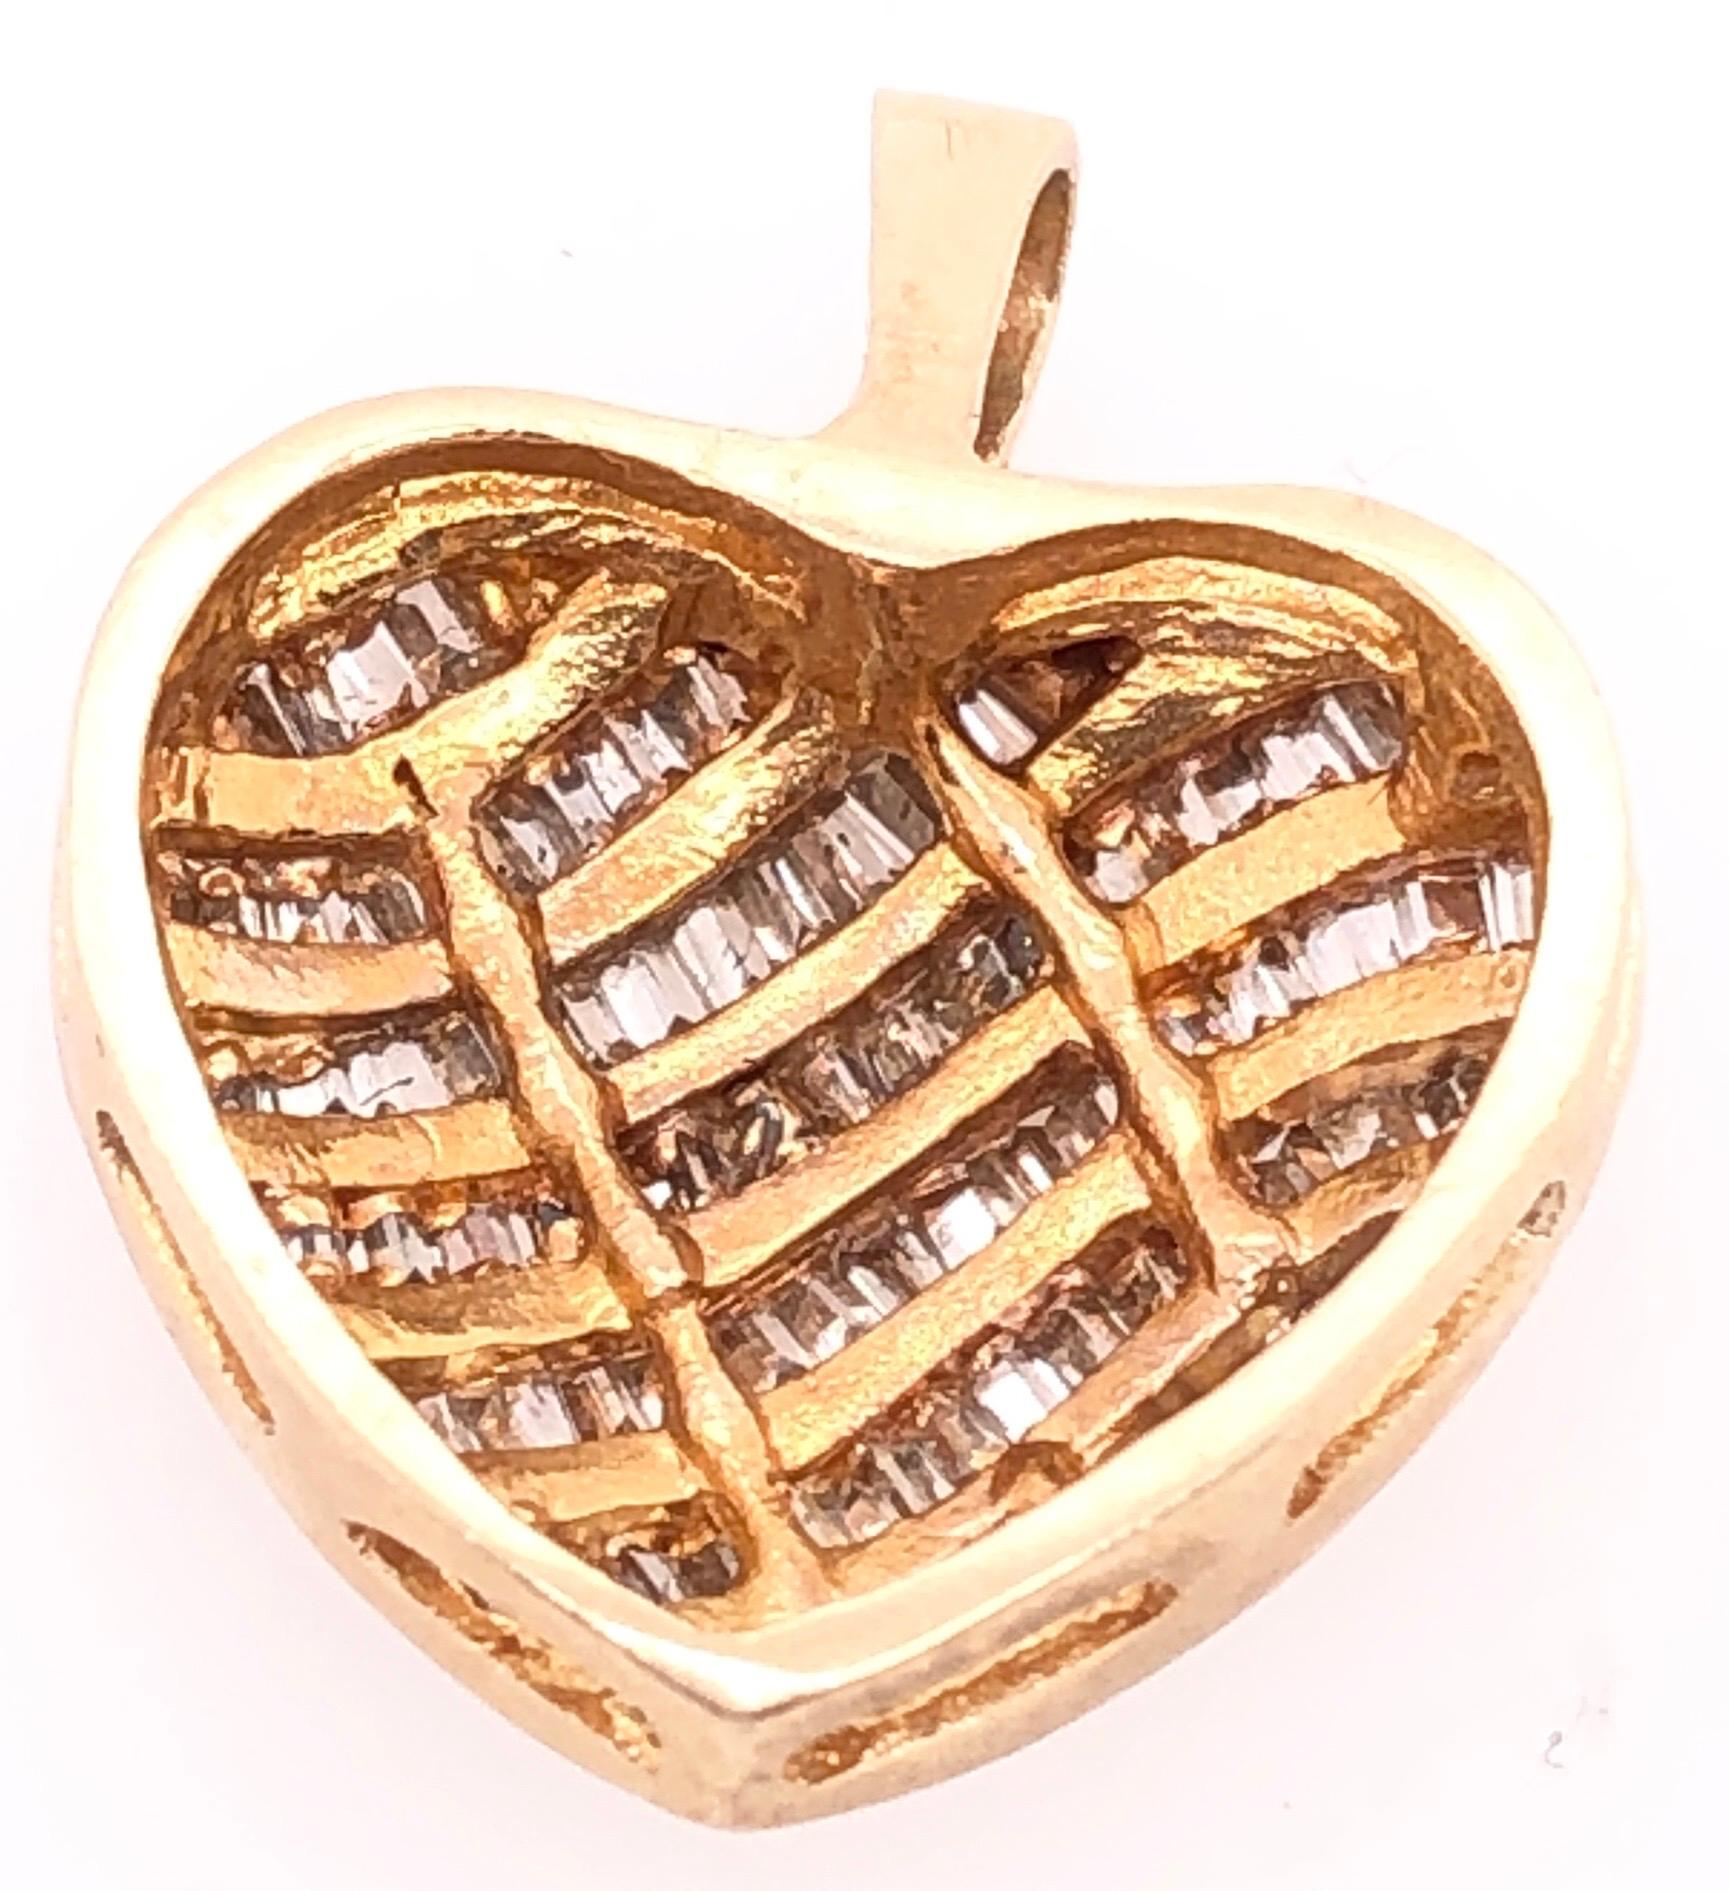 14 Karat Yellow Gold Heart Charm/Pendant with Diamonds.
3.3 grams total weight.